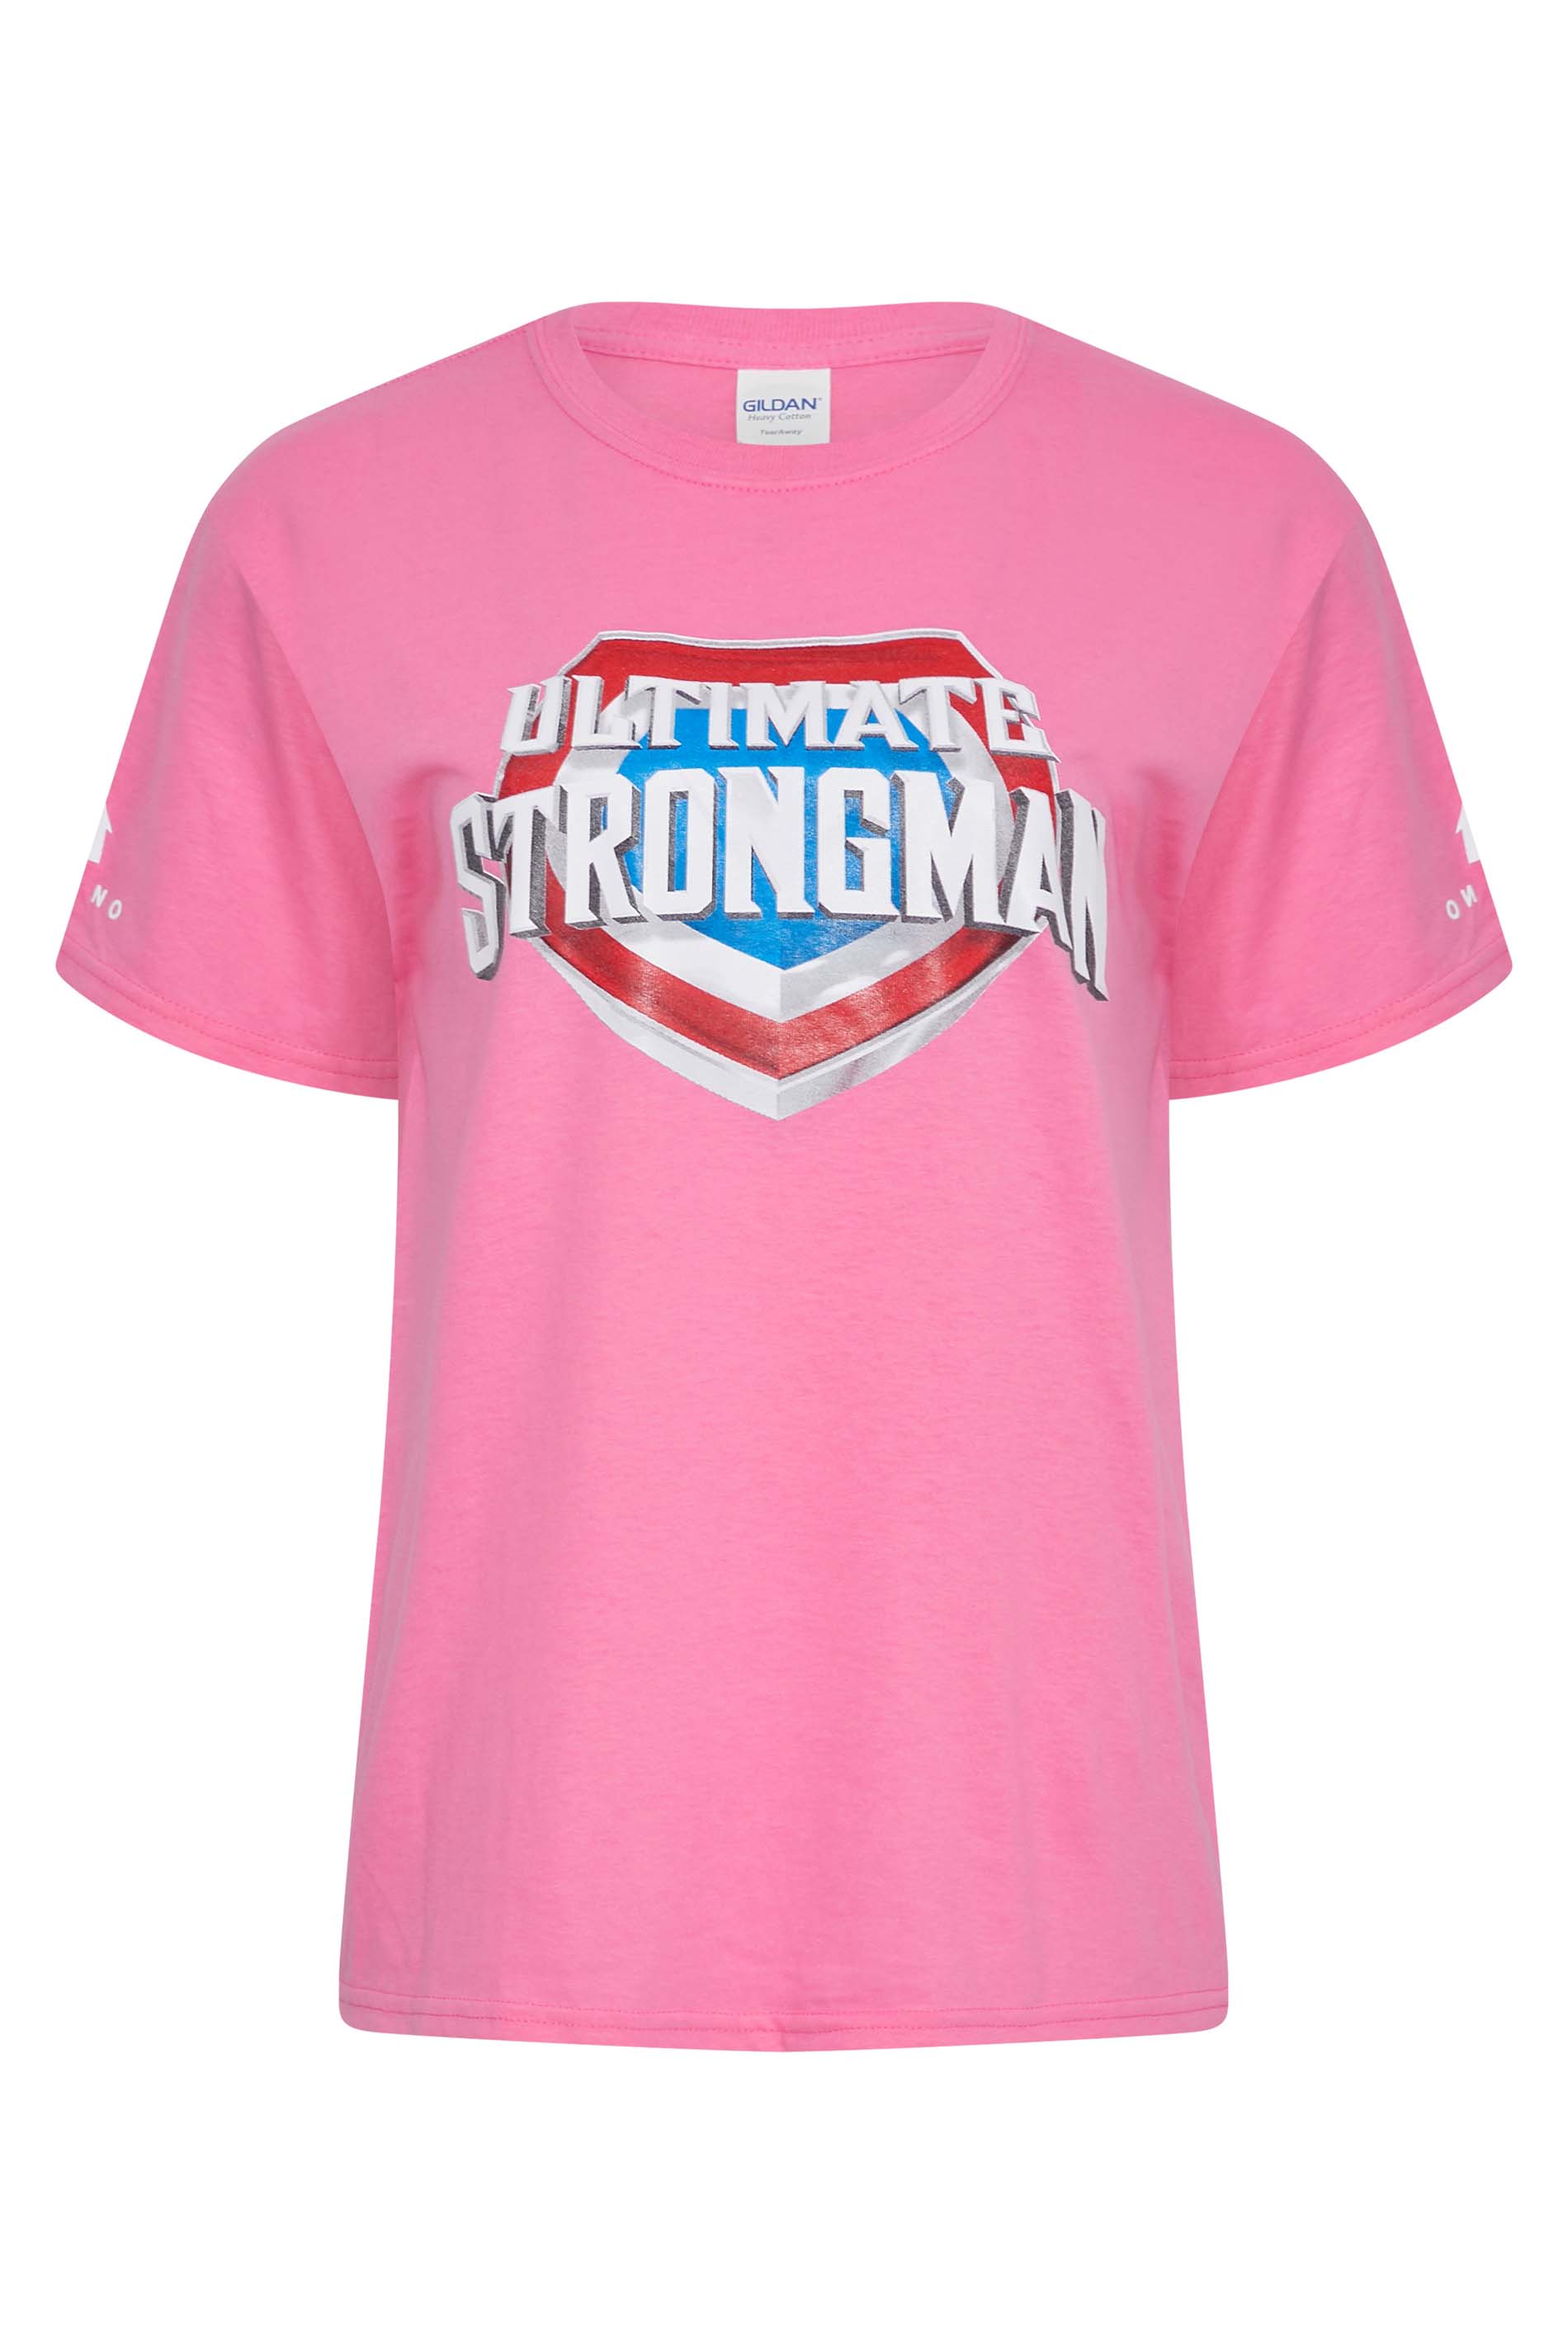 BadRhino Girls Light Pink Ultimate Strongman T-Shirt 1